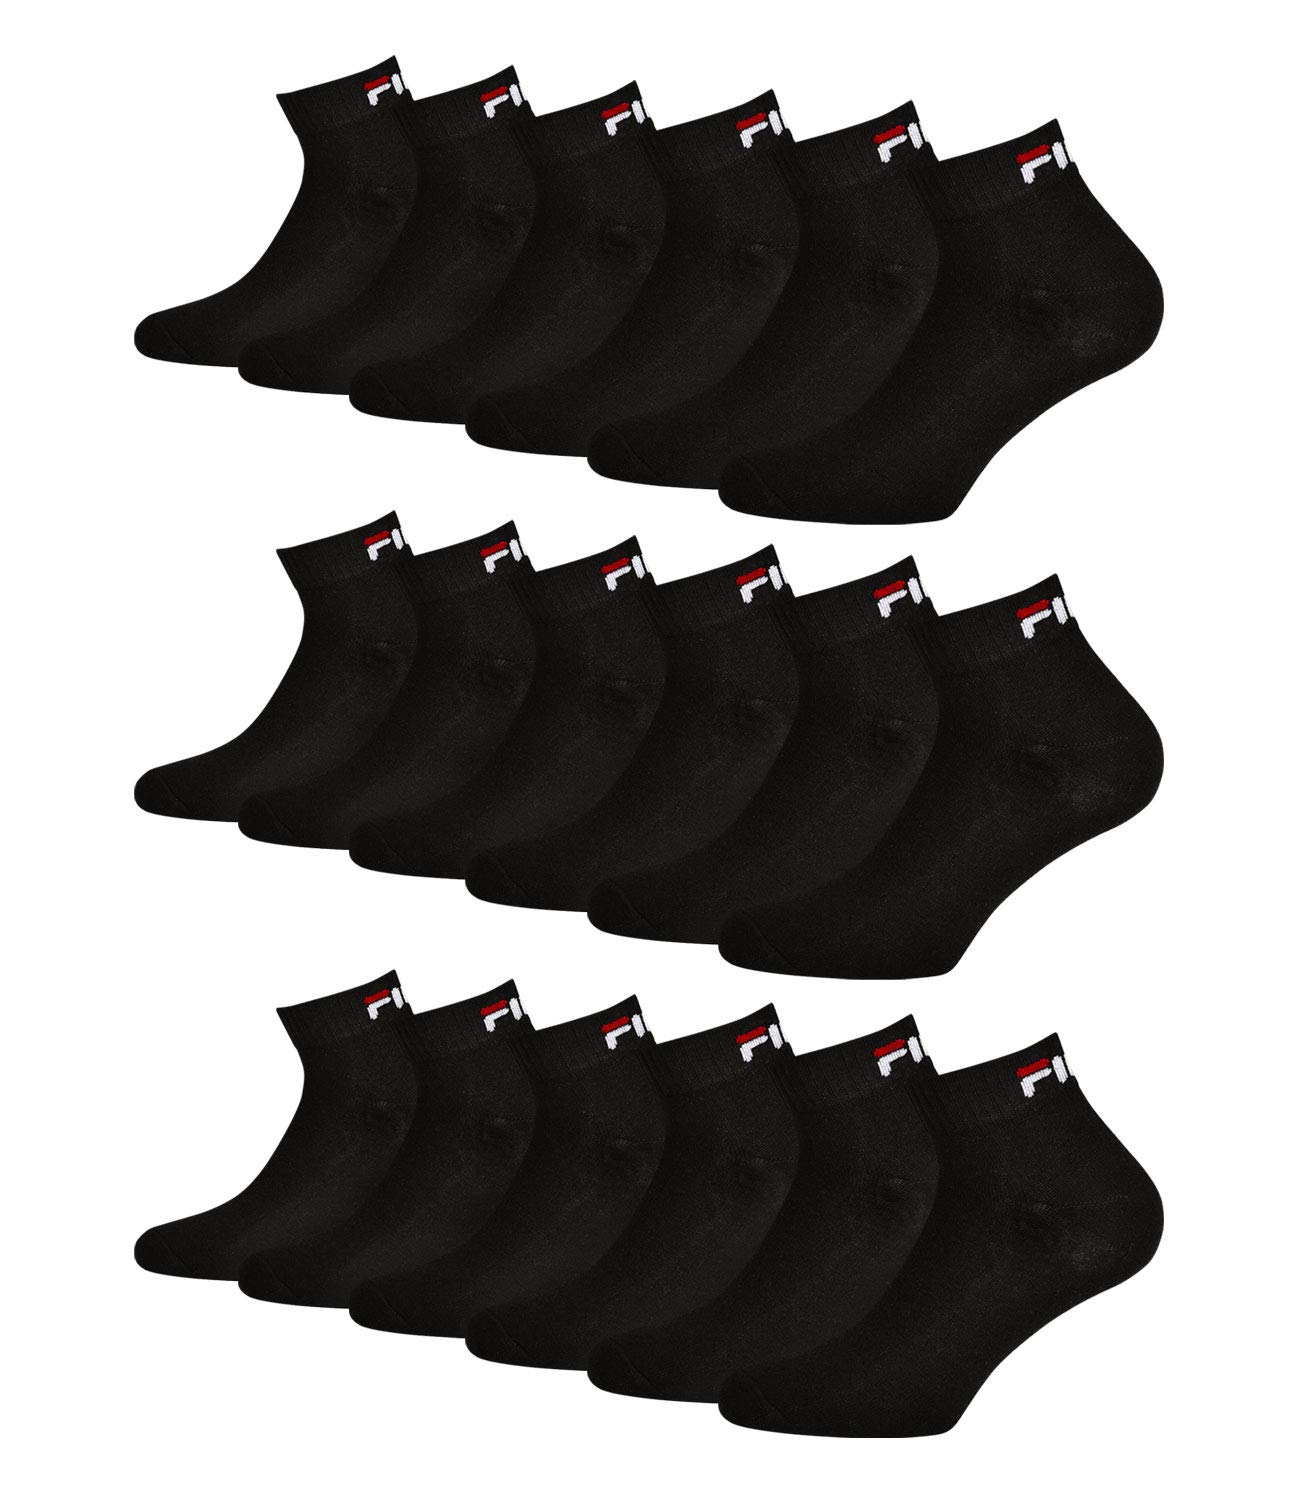 FILA Unisex Quarter Socken Sportsocken Kurzsocken F9300 9 Paar, Größe:39-42, Artikel:-200 black